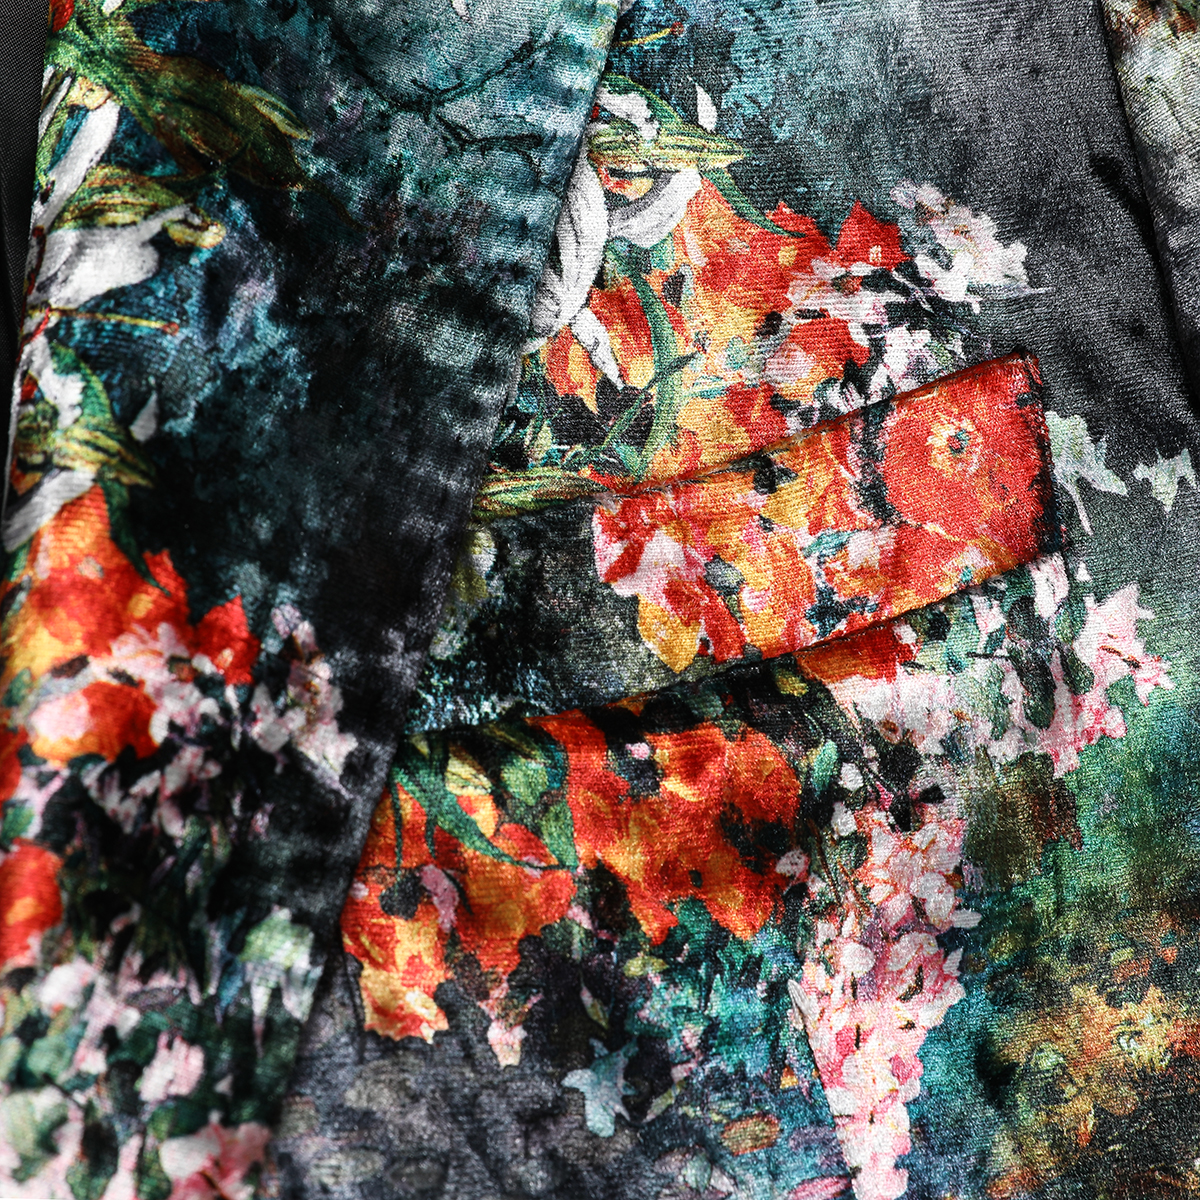 Men’s floral printed velvet suit blazer